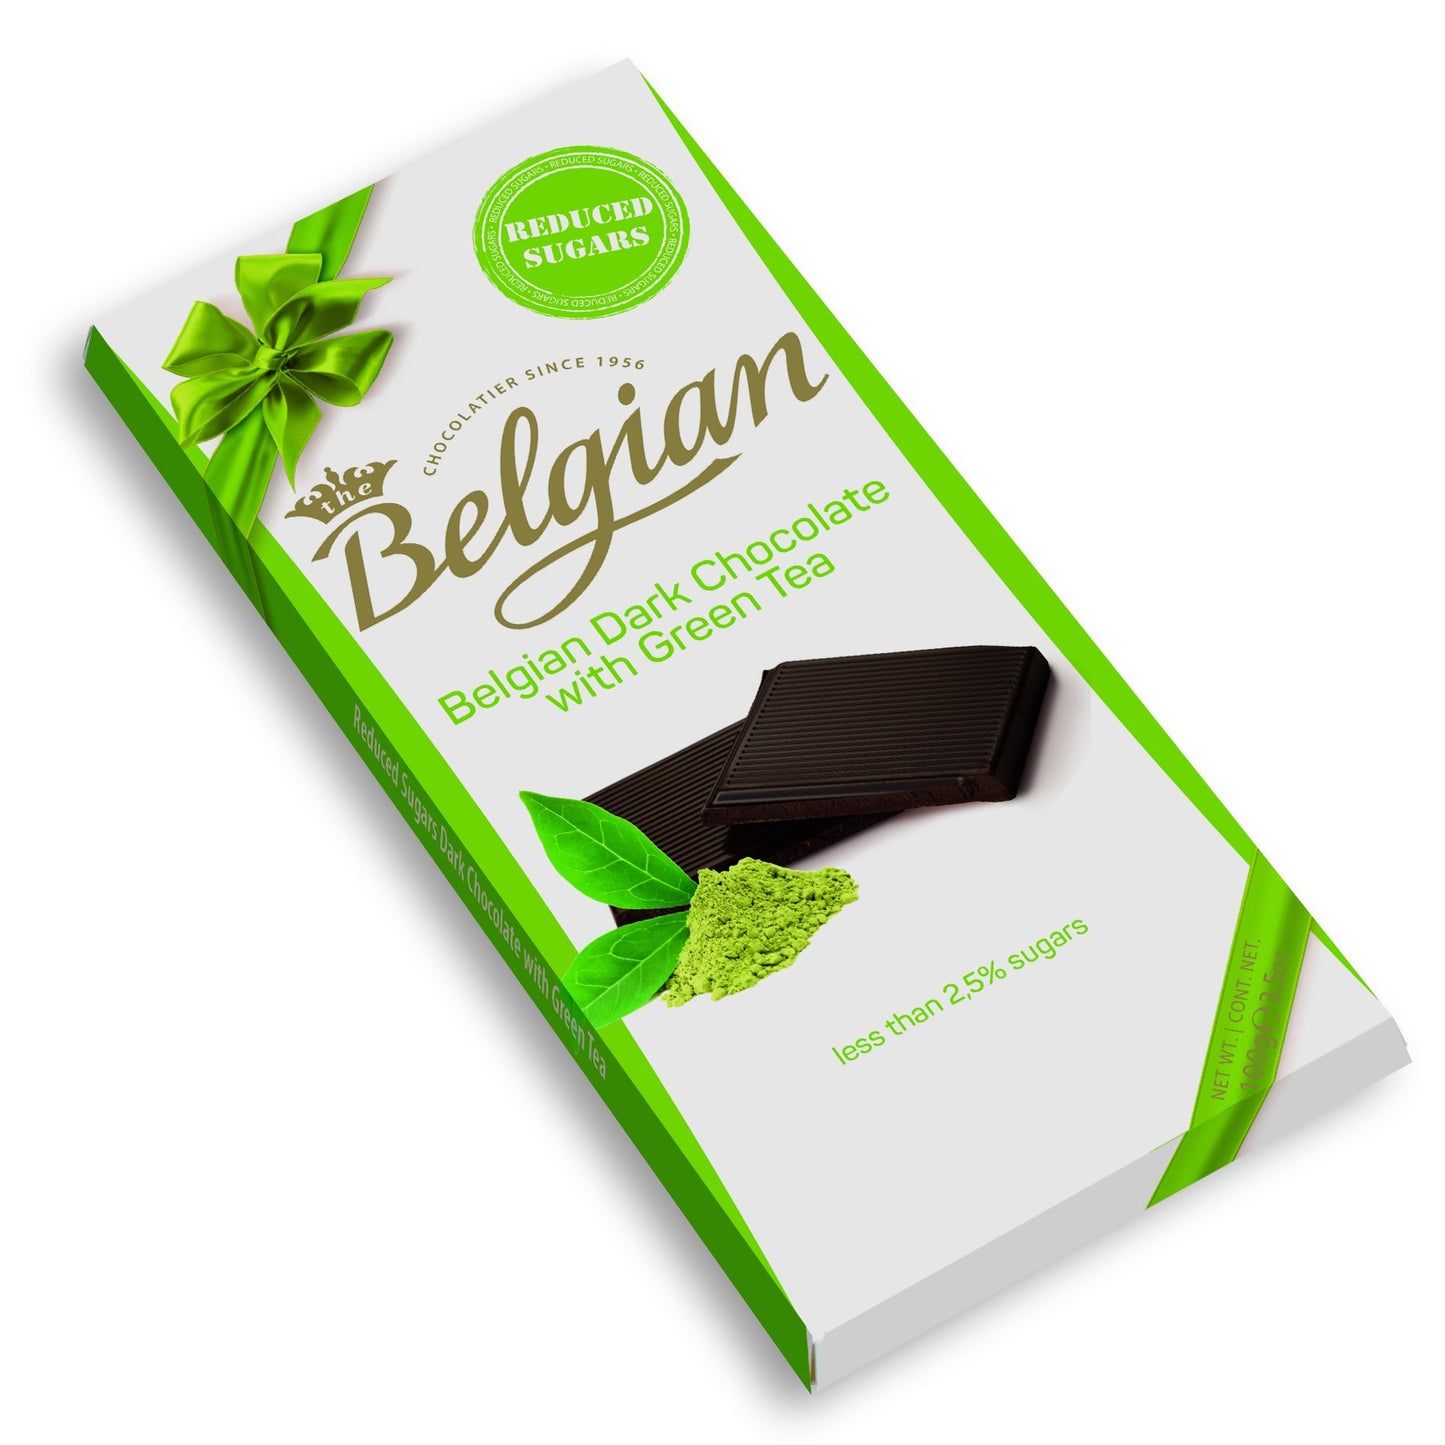 [The Belgian][Bars][Reduced Sugar][Dark Chocolate with Green Tea]